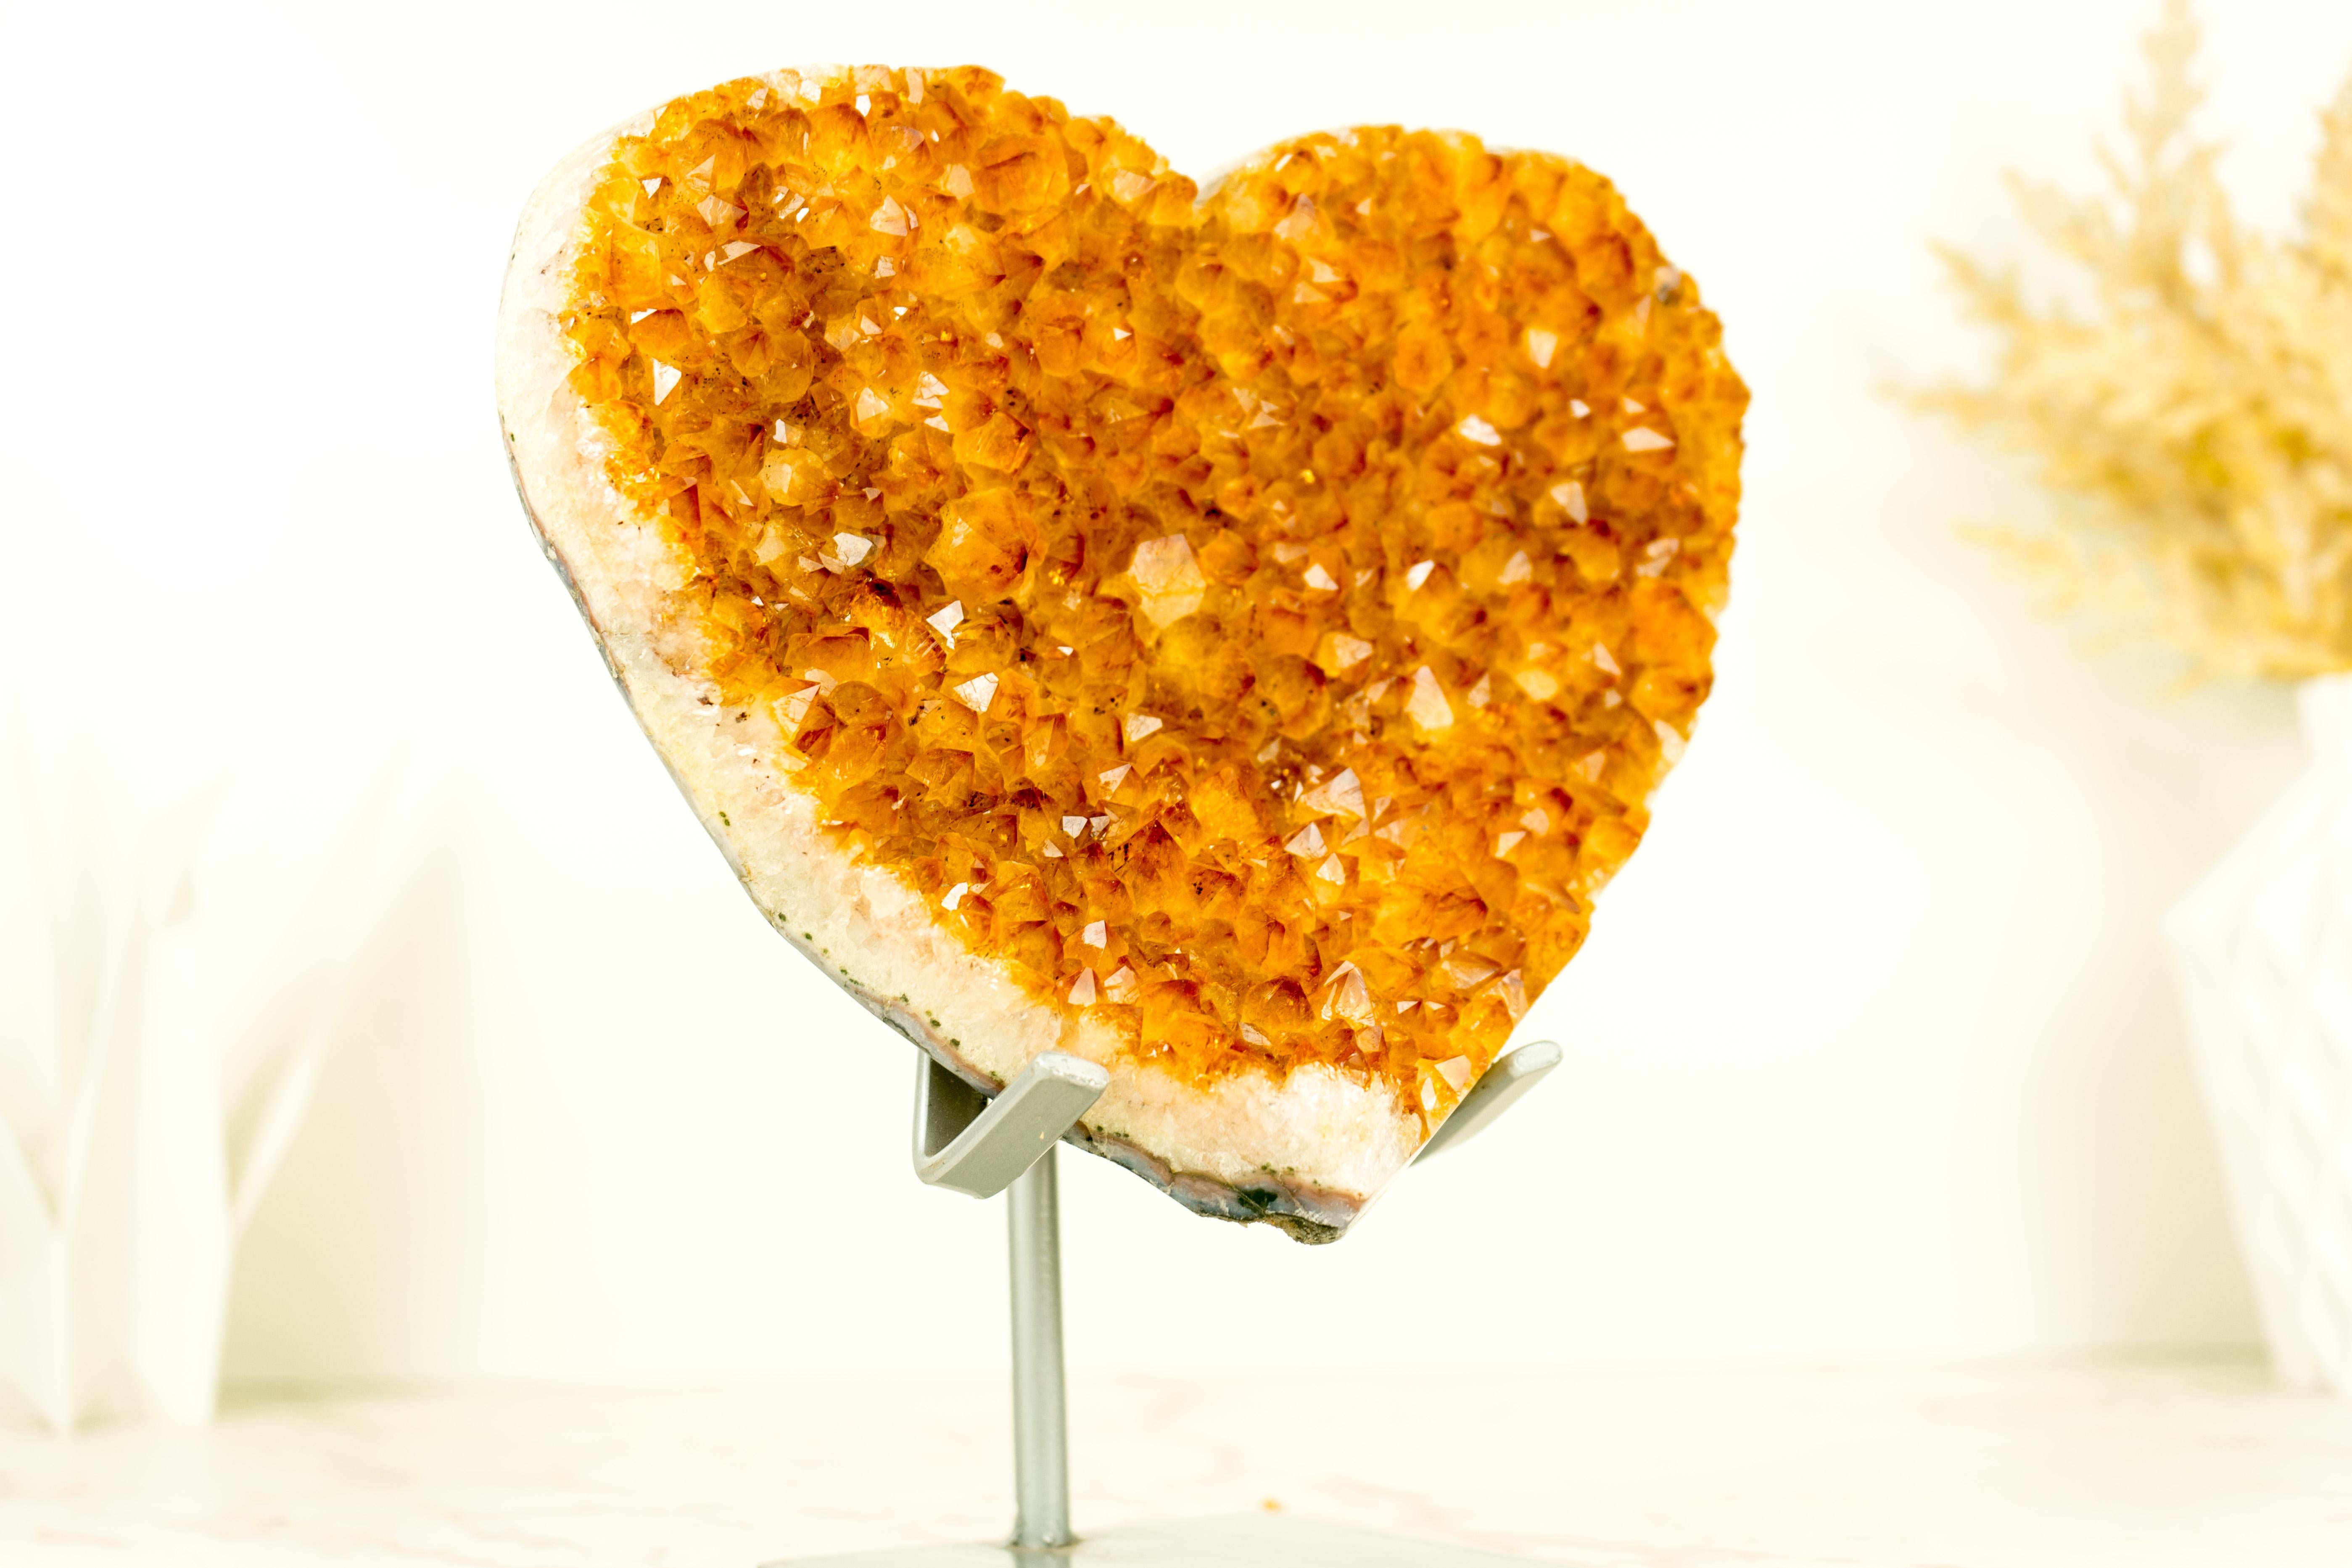 Crystal Citrine Heart Sculpture with Deep Orange, Shiny High-Grade Citrine Druzy For Sale 2